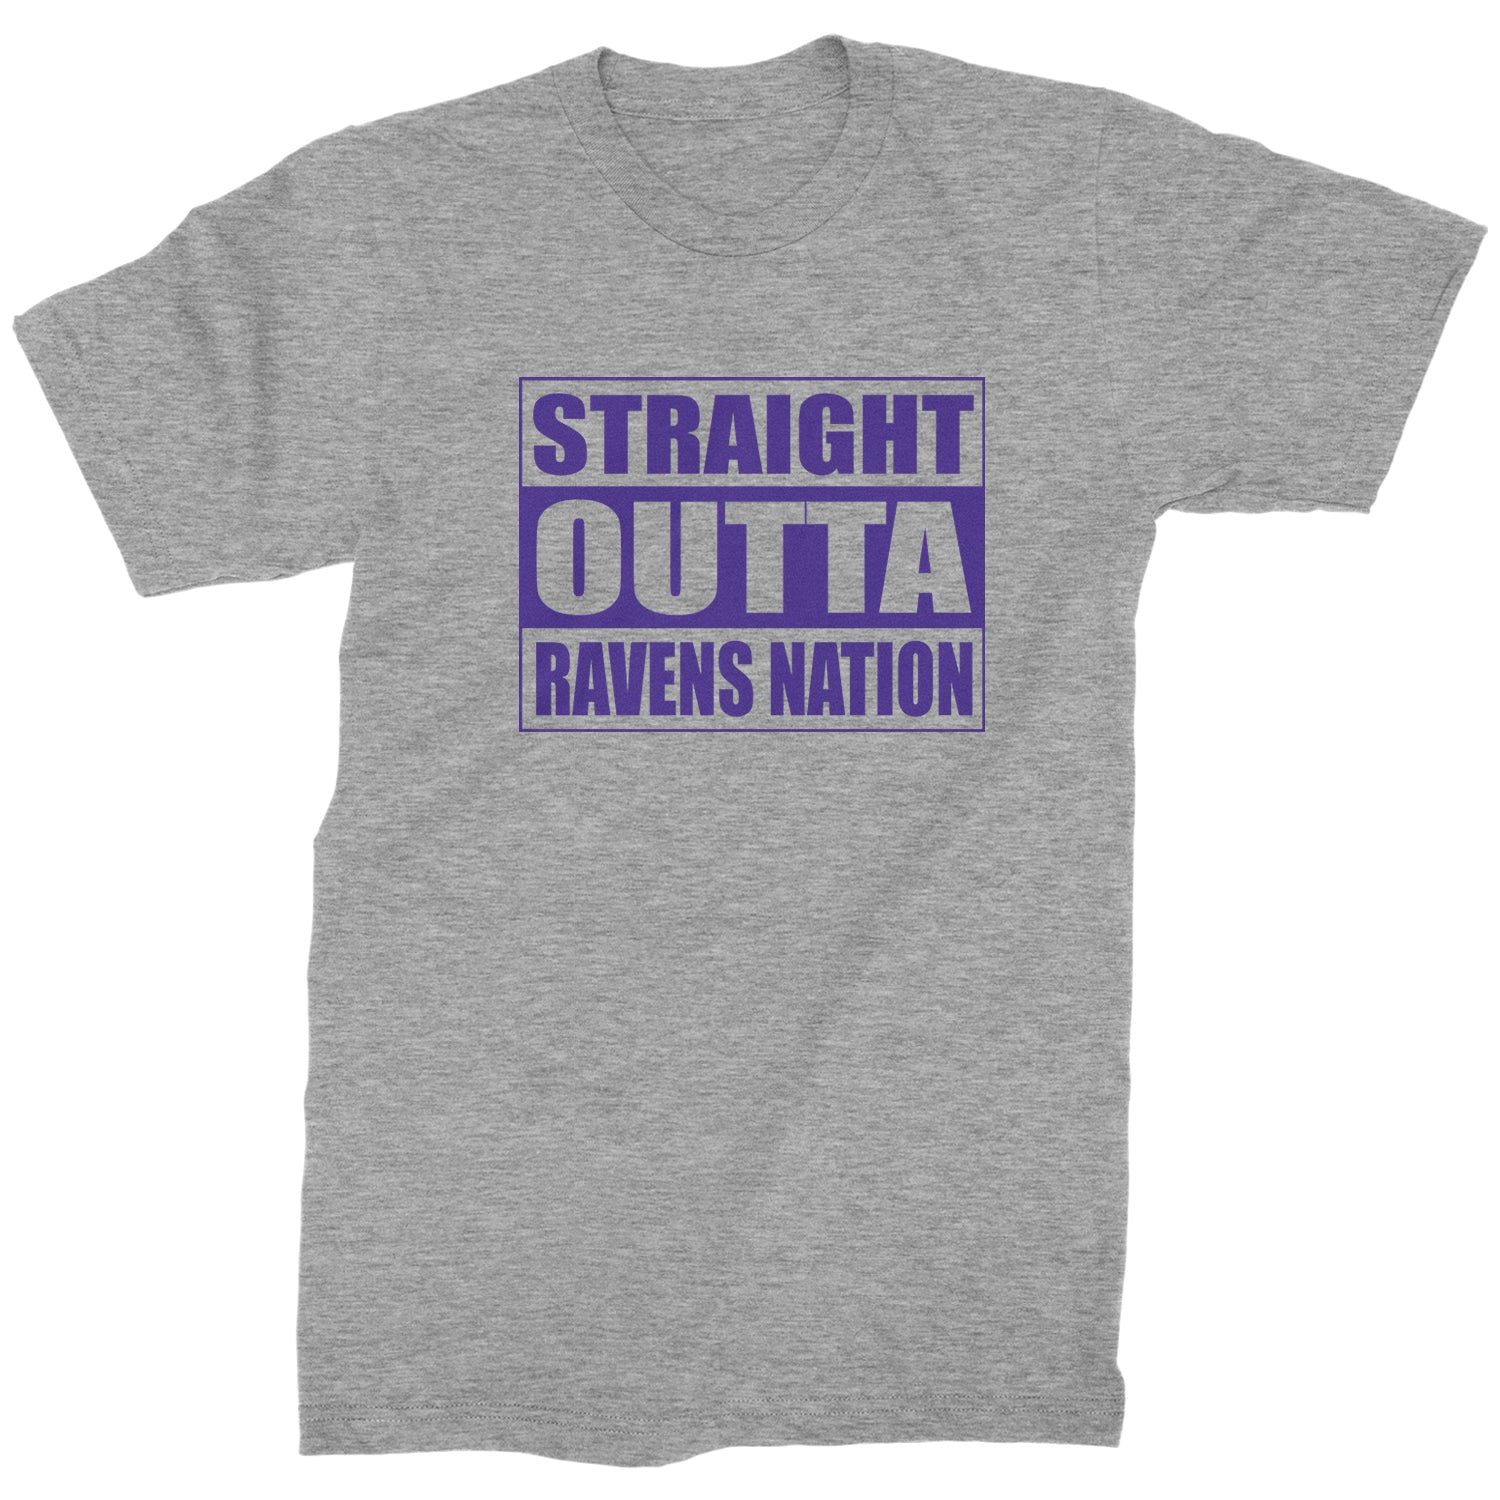 Straight Outta Ravens Nation Mens T-shirt bateman, brown, football, jackson, lamar, marquise, rashod, sammy, watkins by Expression Tees